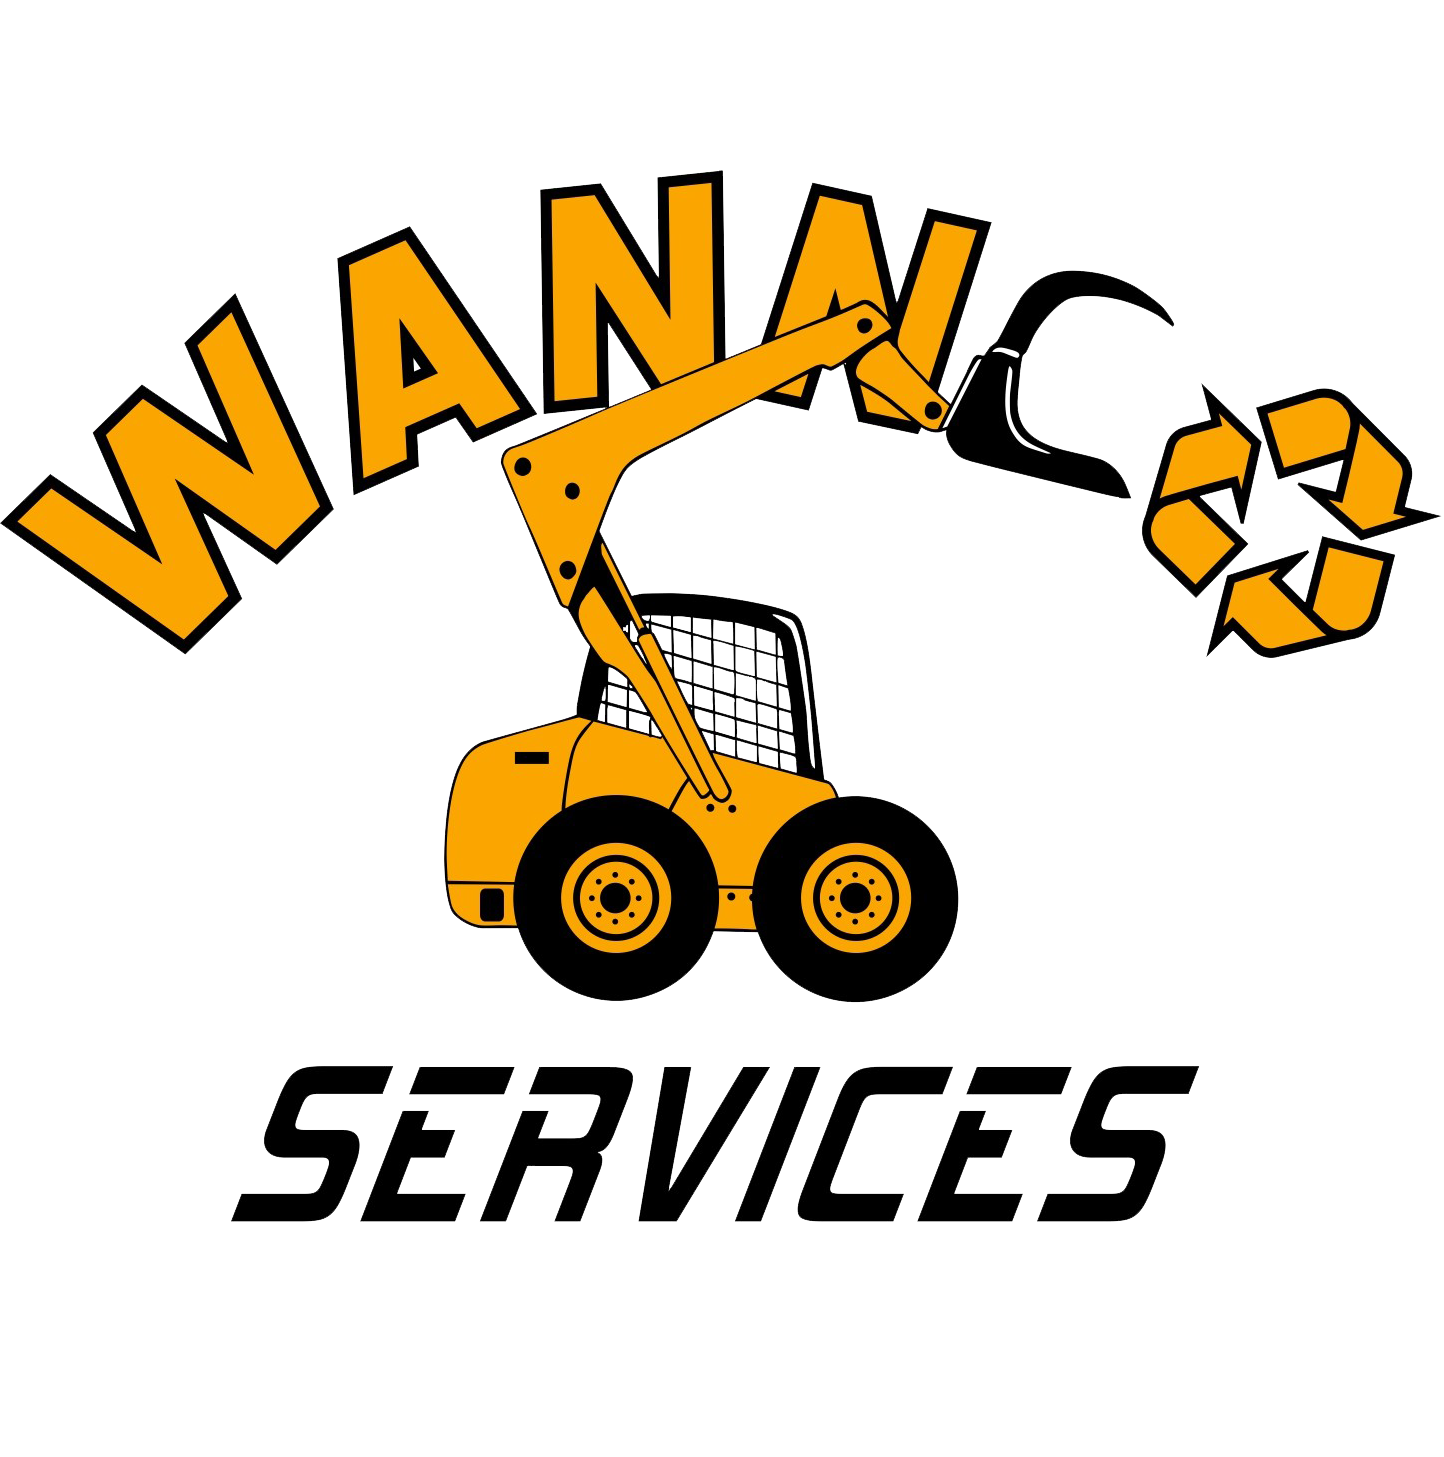 Wannco Services – Demolition Contractor & Roll Off Dumpster Rentals | Granbury, TX